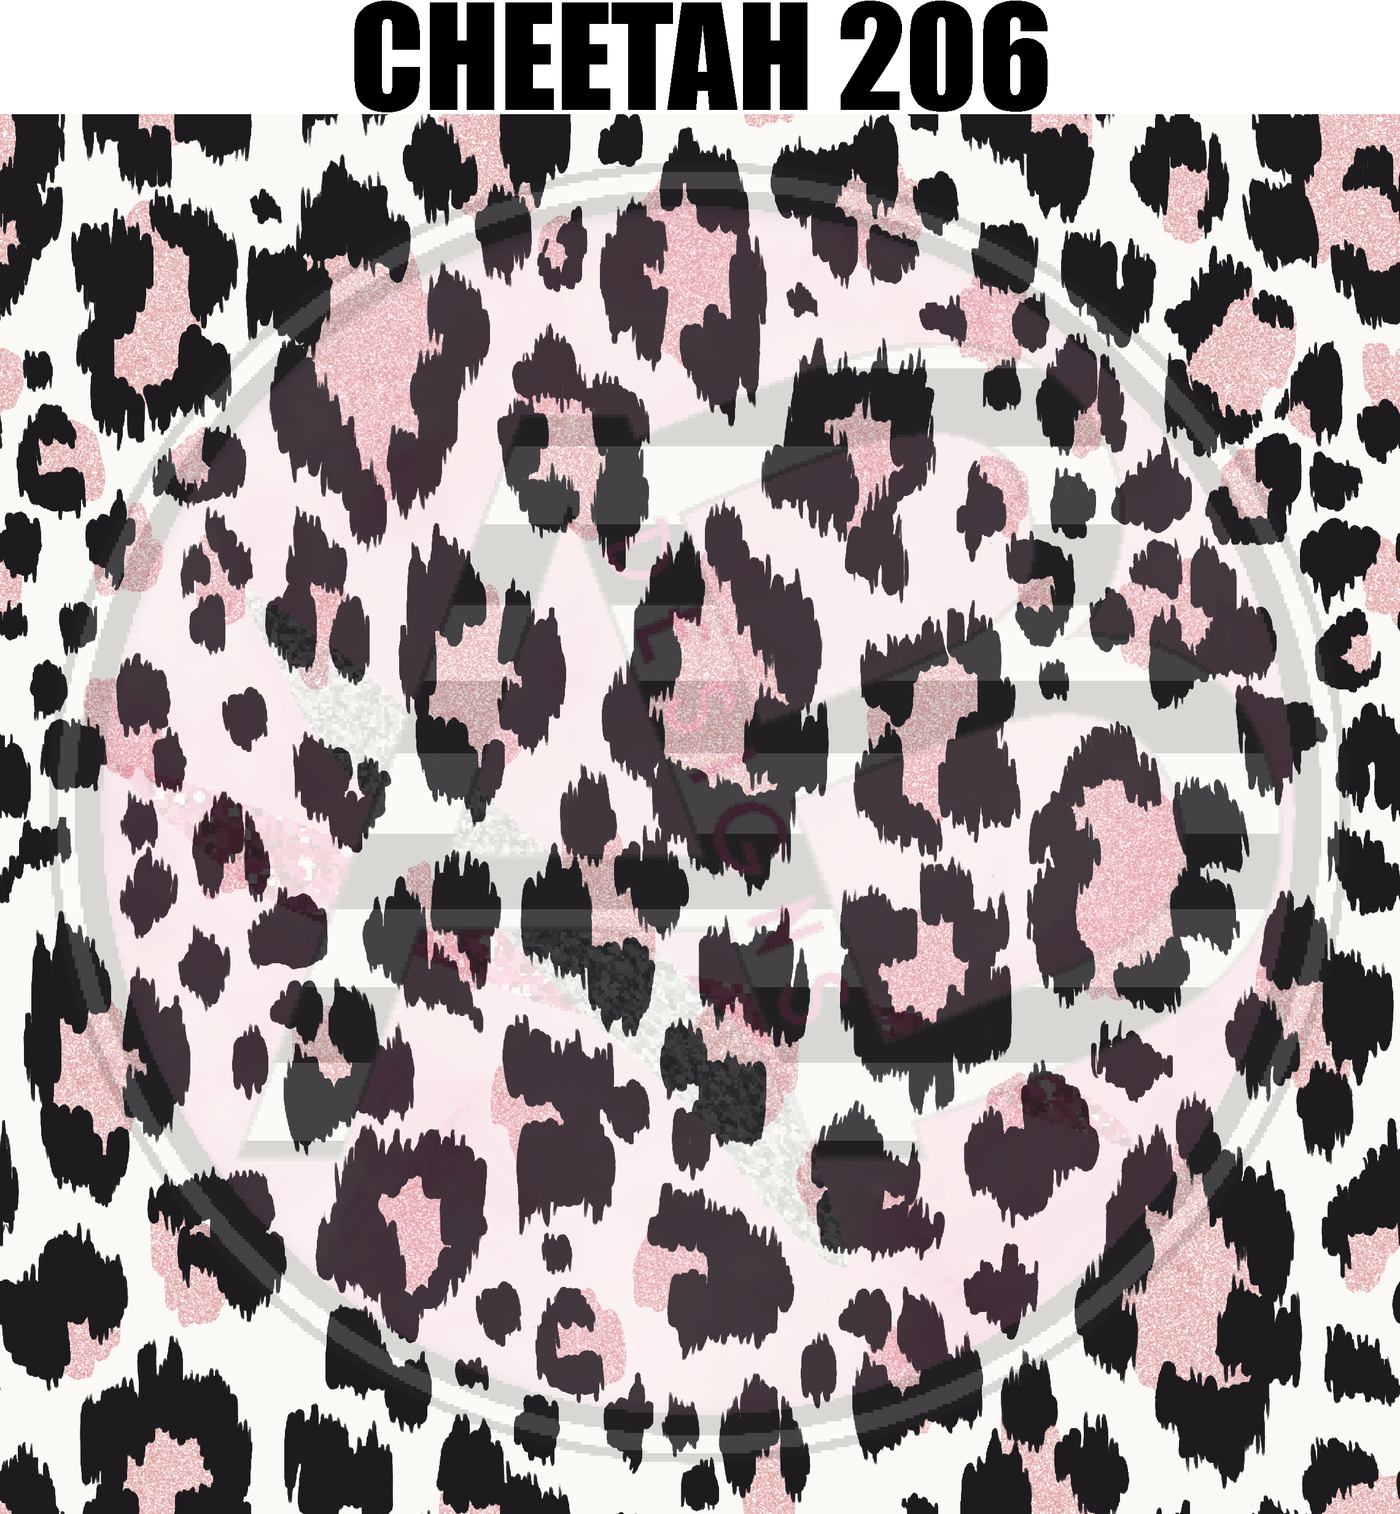 Adhesive Patterned Vinyl - Cheetah 206